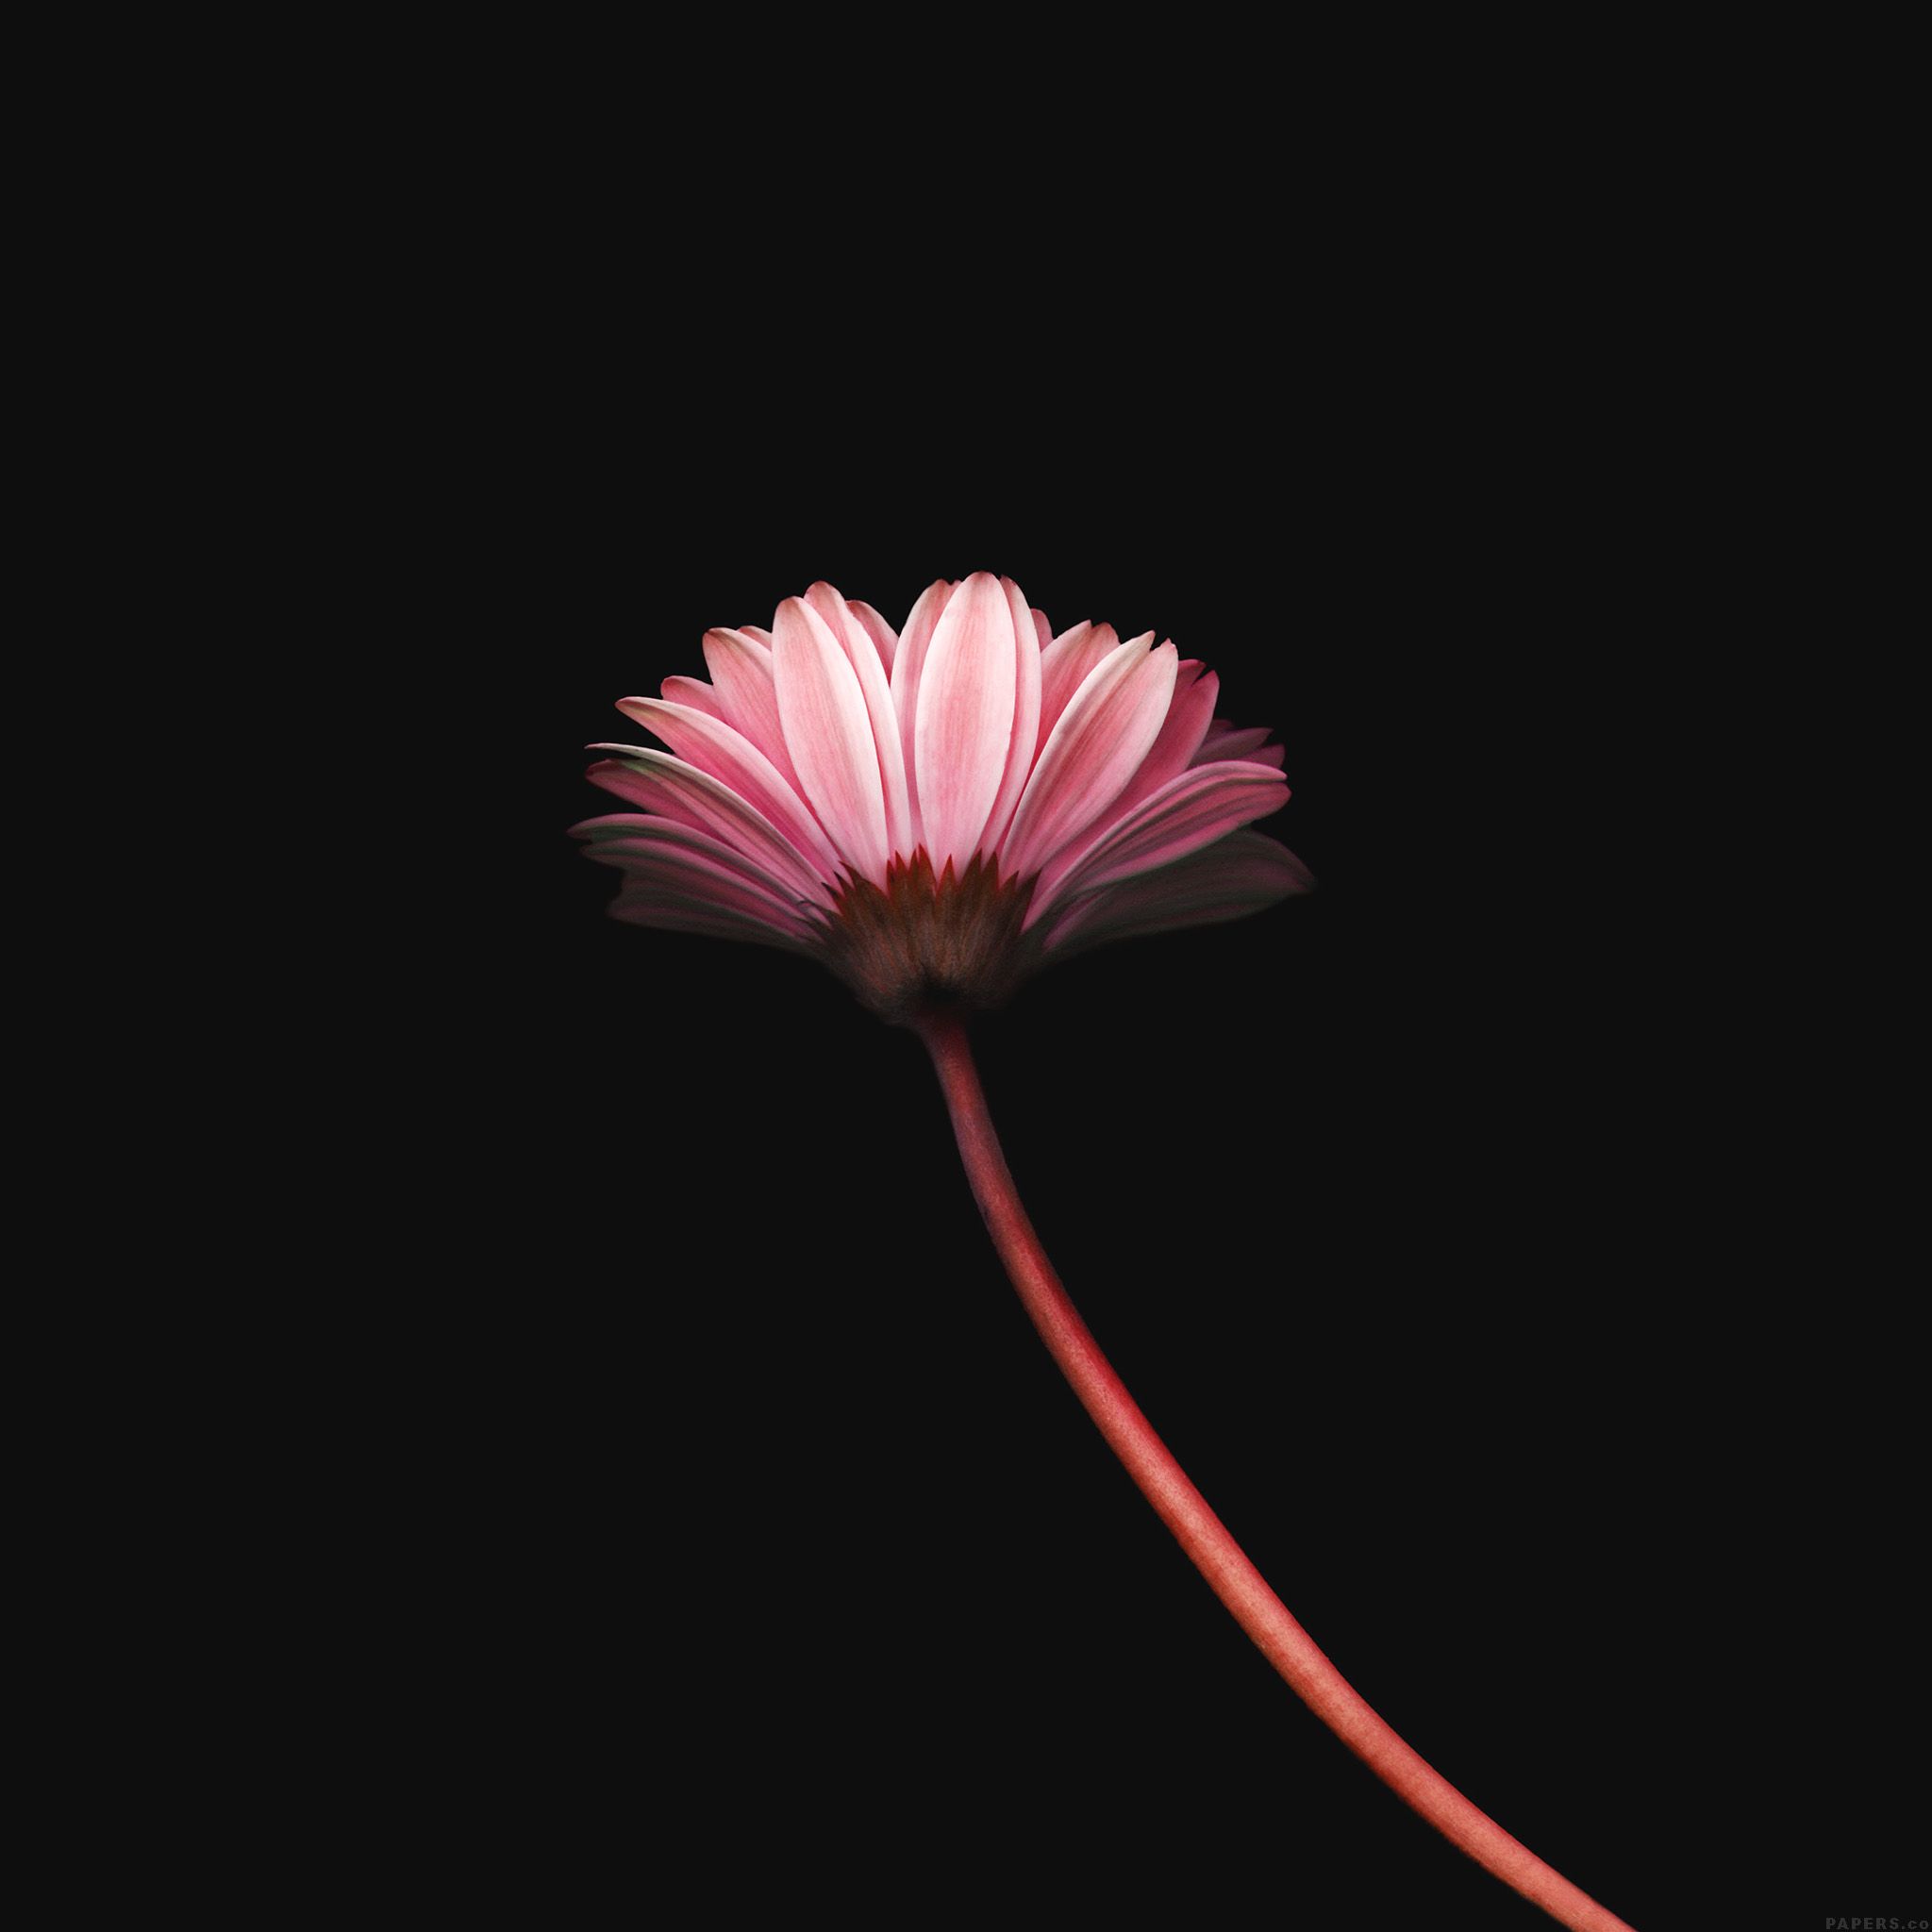 Lonely Flower Dark Red Simple Minimal Nature iPad Air Wallpaper Free Download